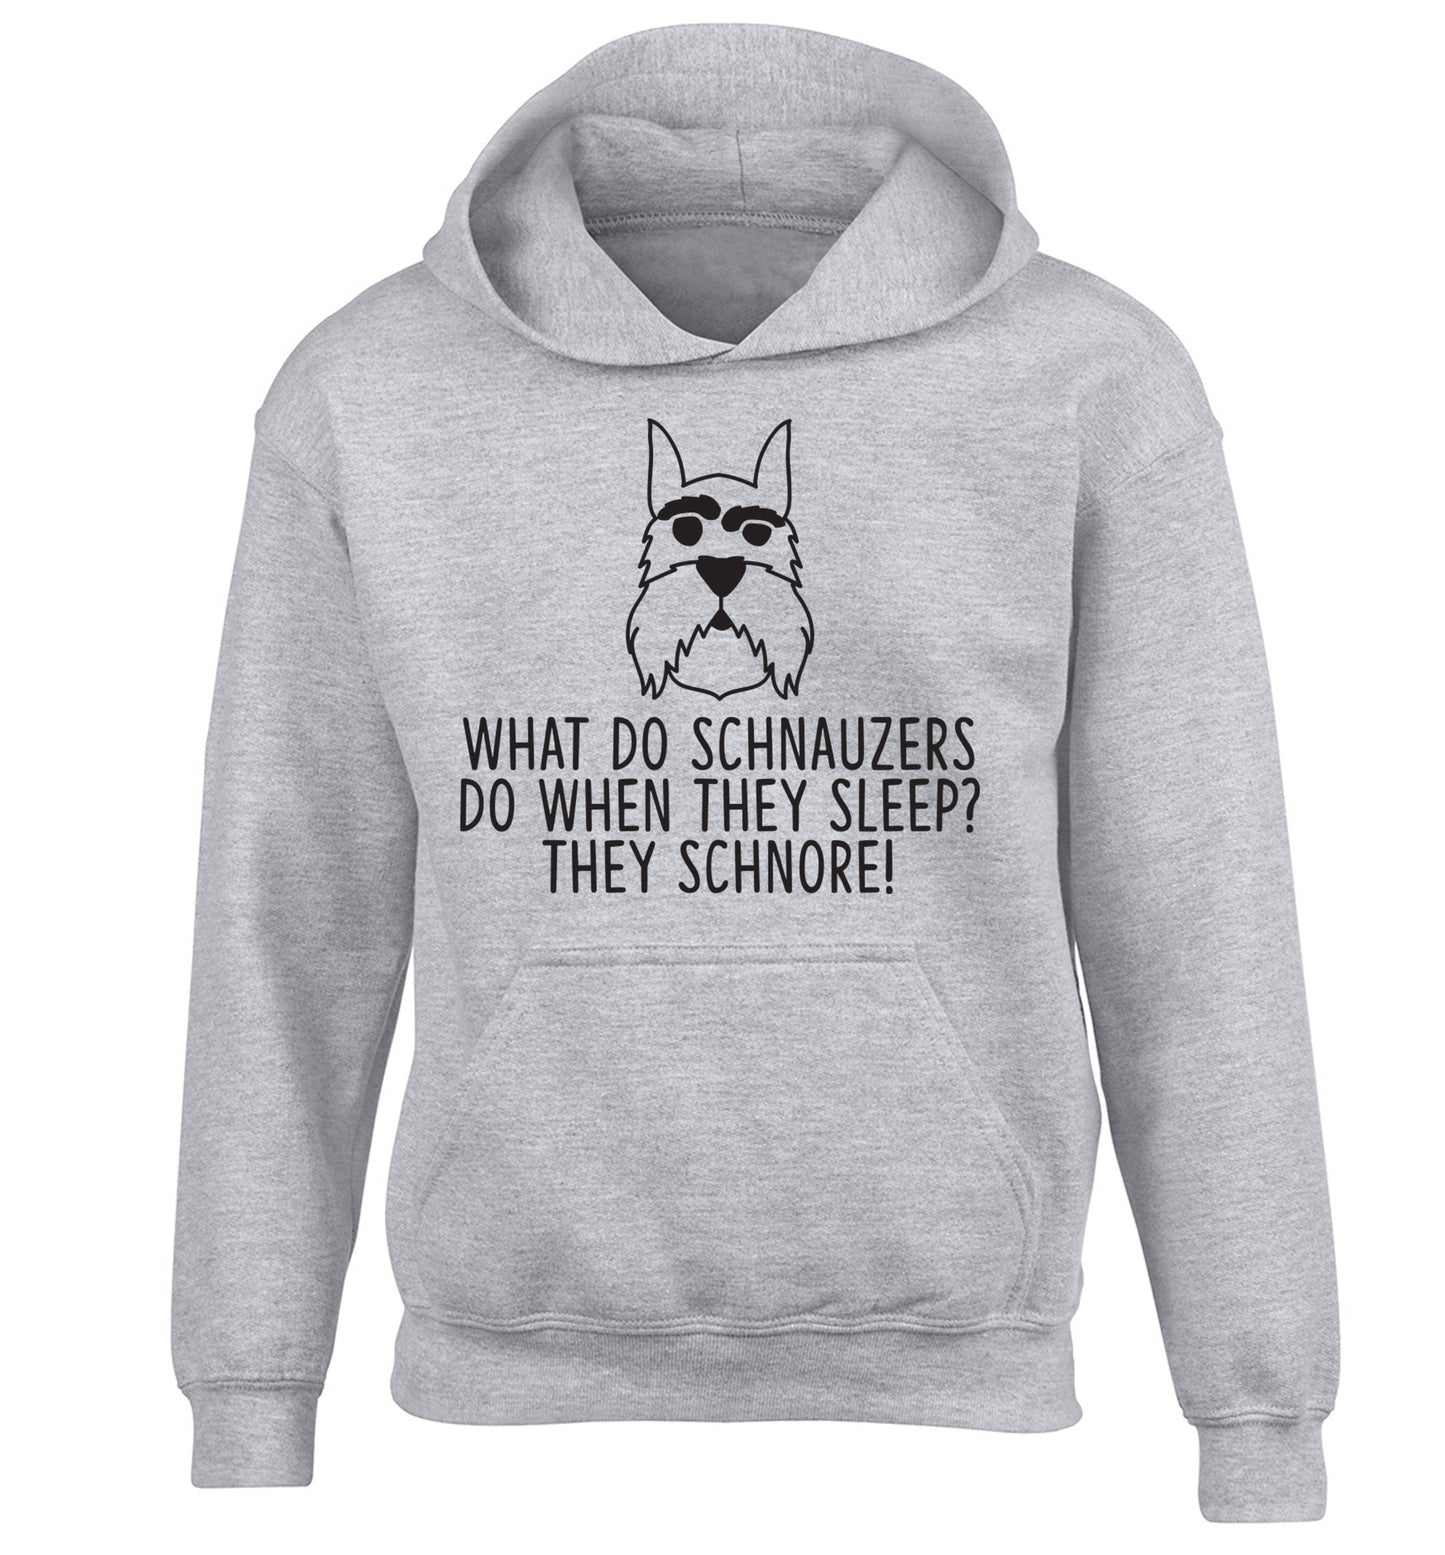 What do schnauzers do when they sleep? Schnore! children's grey hoodie 12-13 Years